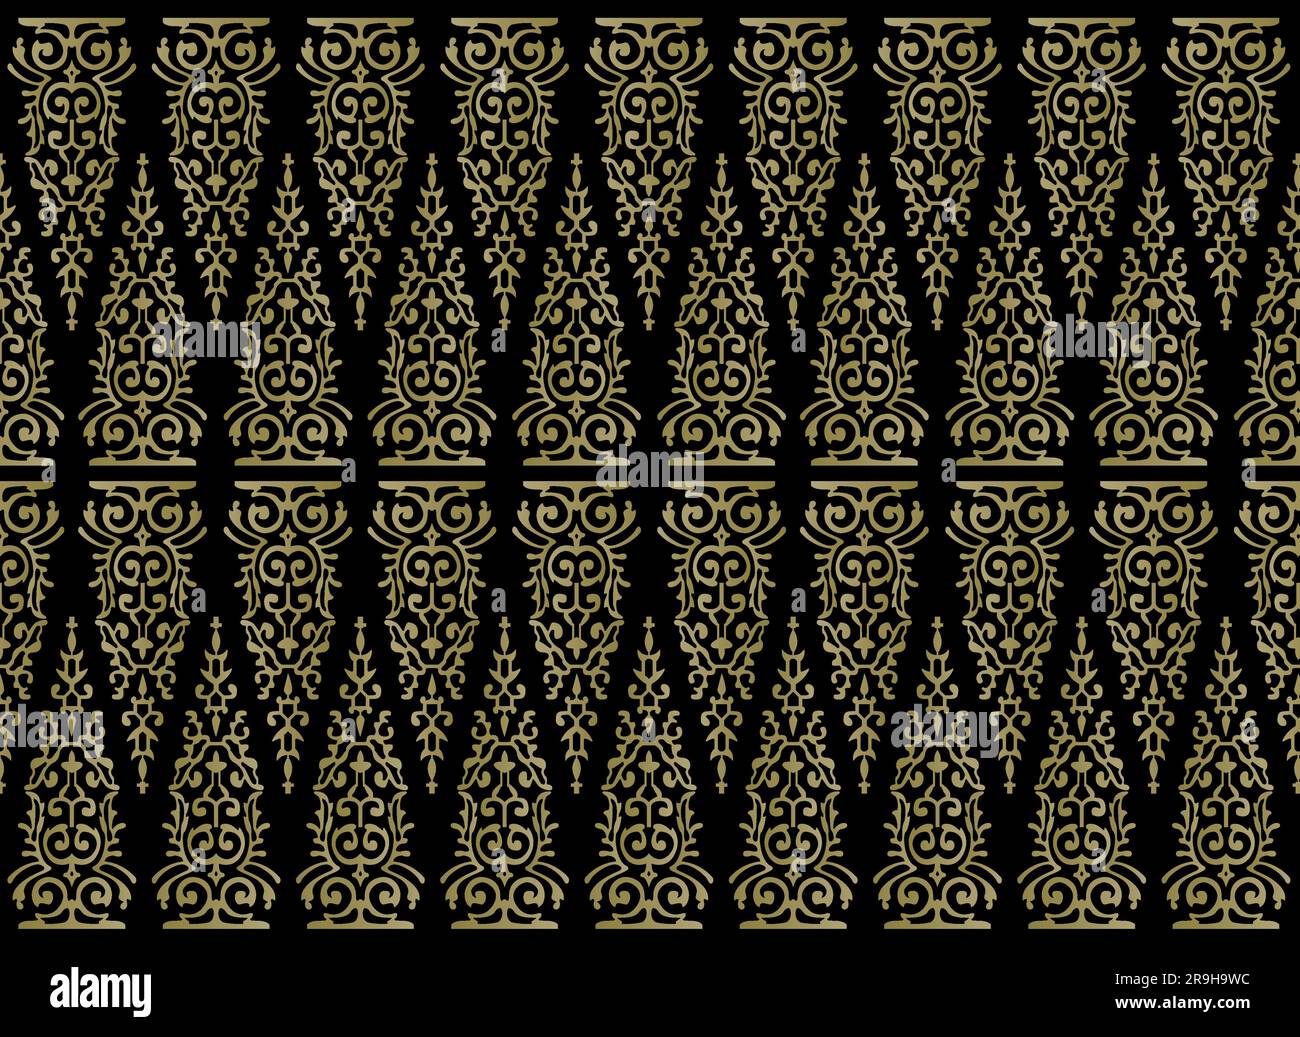 Songket pattern. Abstract geometric ethnic design - indian, java , malaysia, indonesian, peru, mexico, aztec, african, songket batik motif pattern. Stock Vector